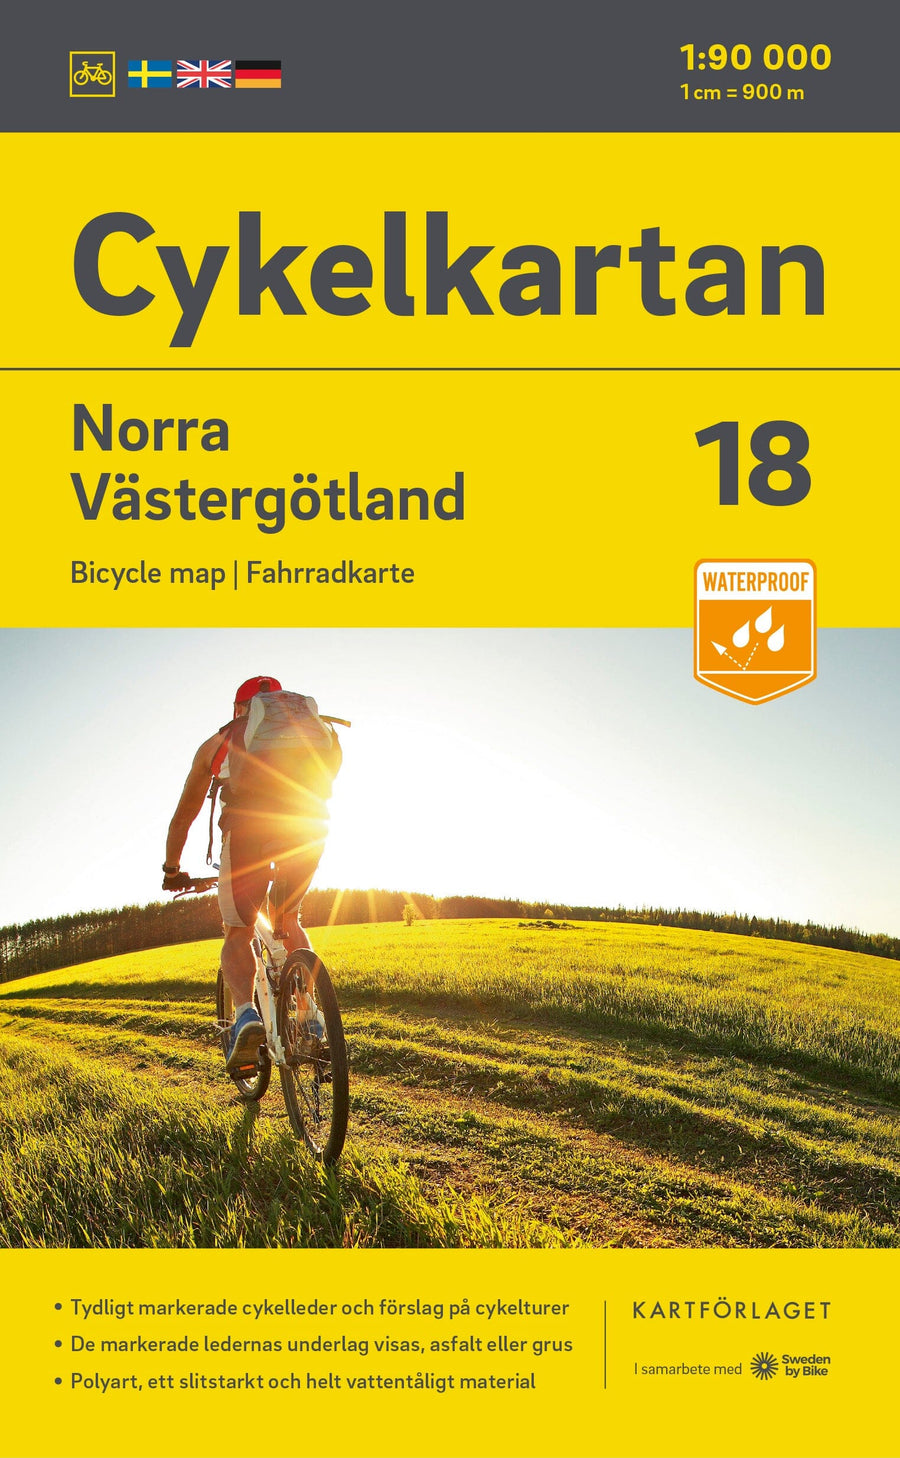 Carte cycliste n° 18 - Västergotland Nord (Suède) | Norstedts carte pliée Norstedts 